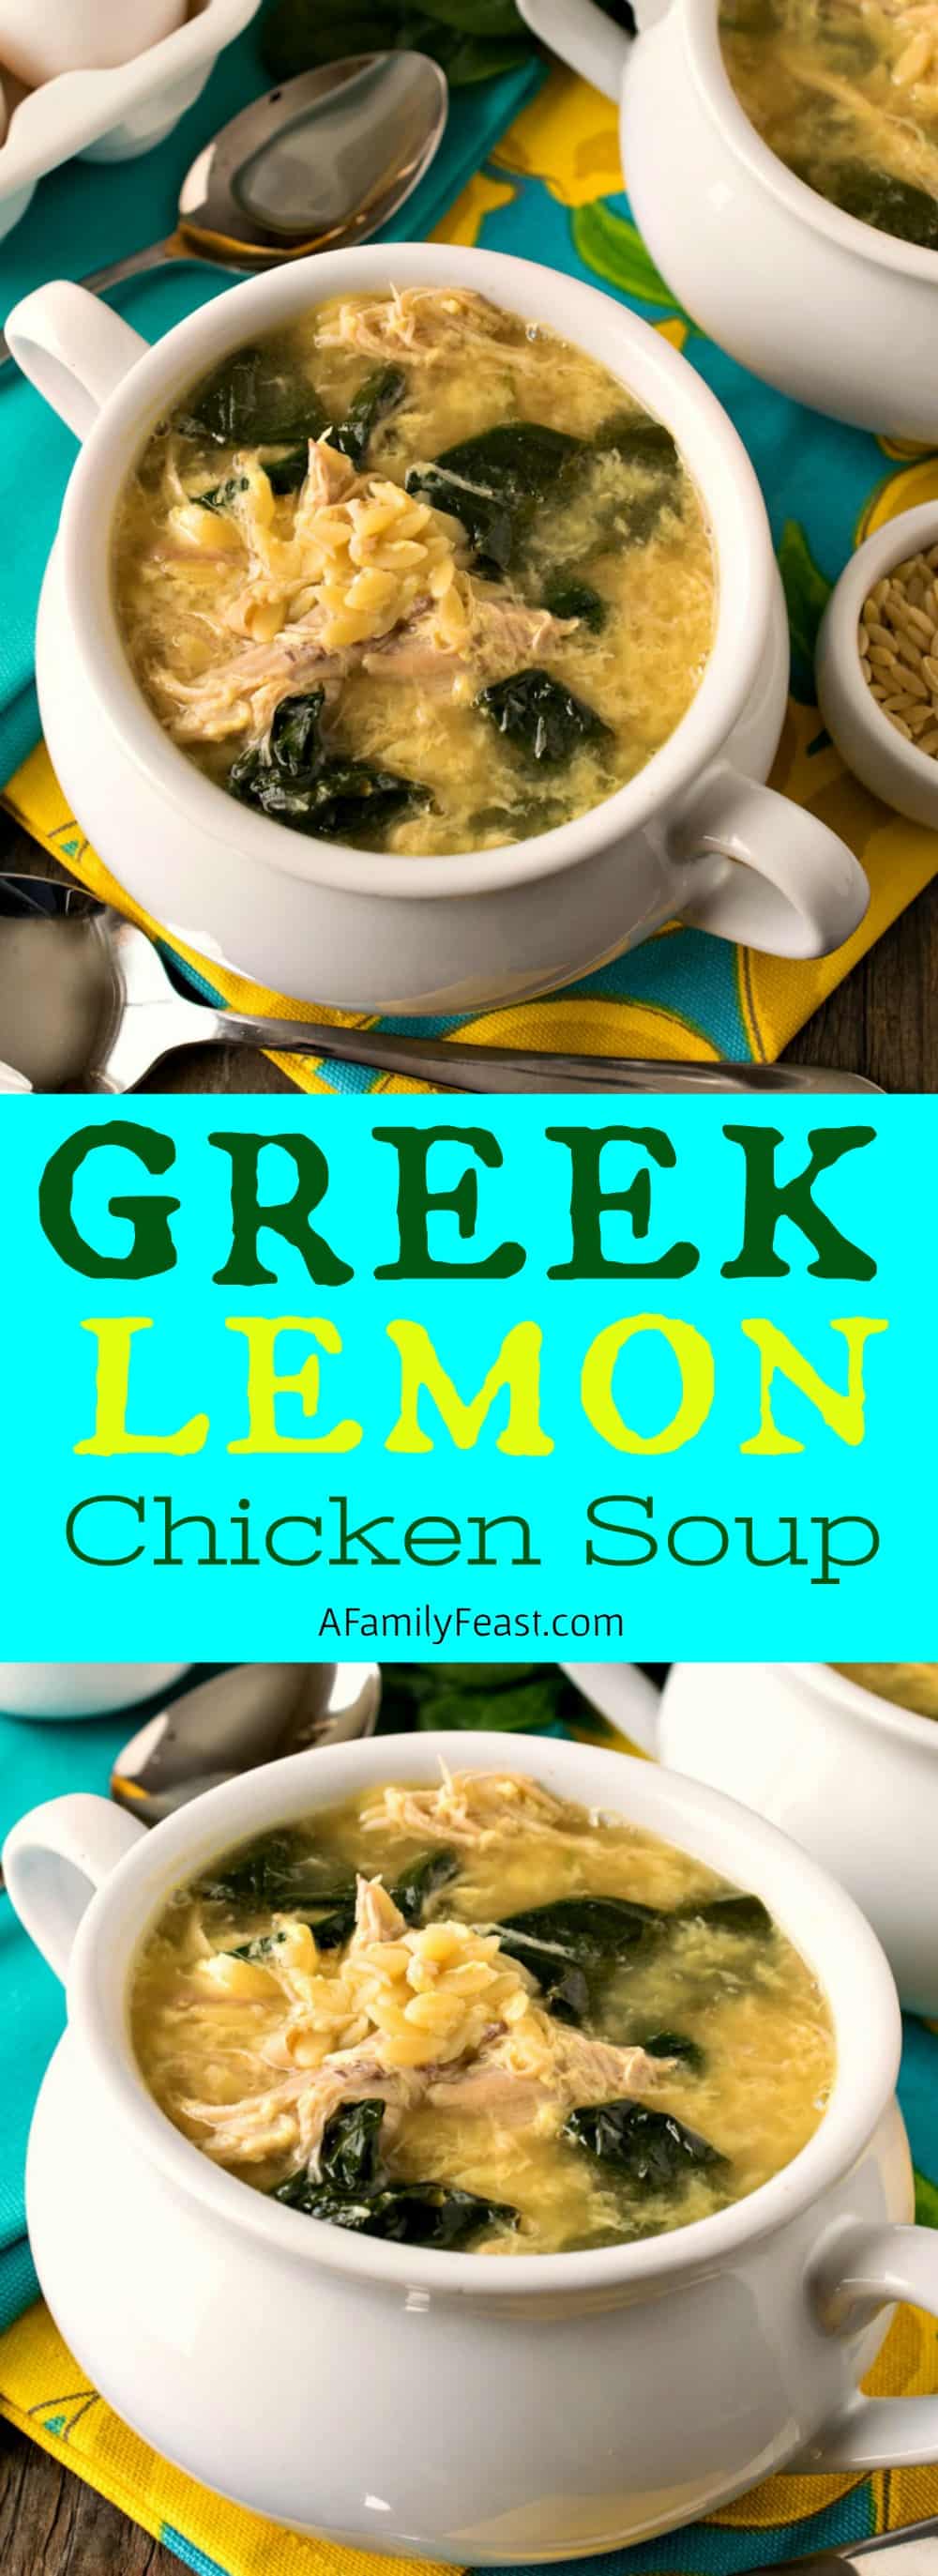 Greek Lemon Chicken Soup with Orzo